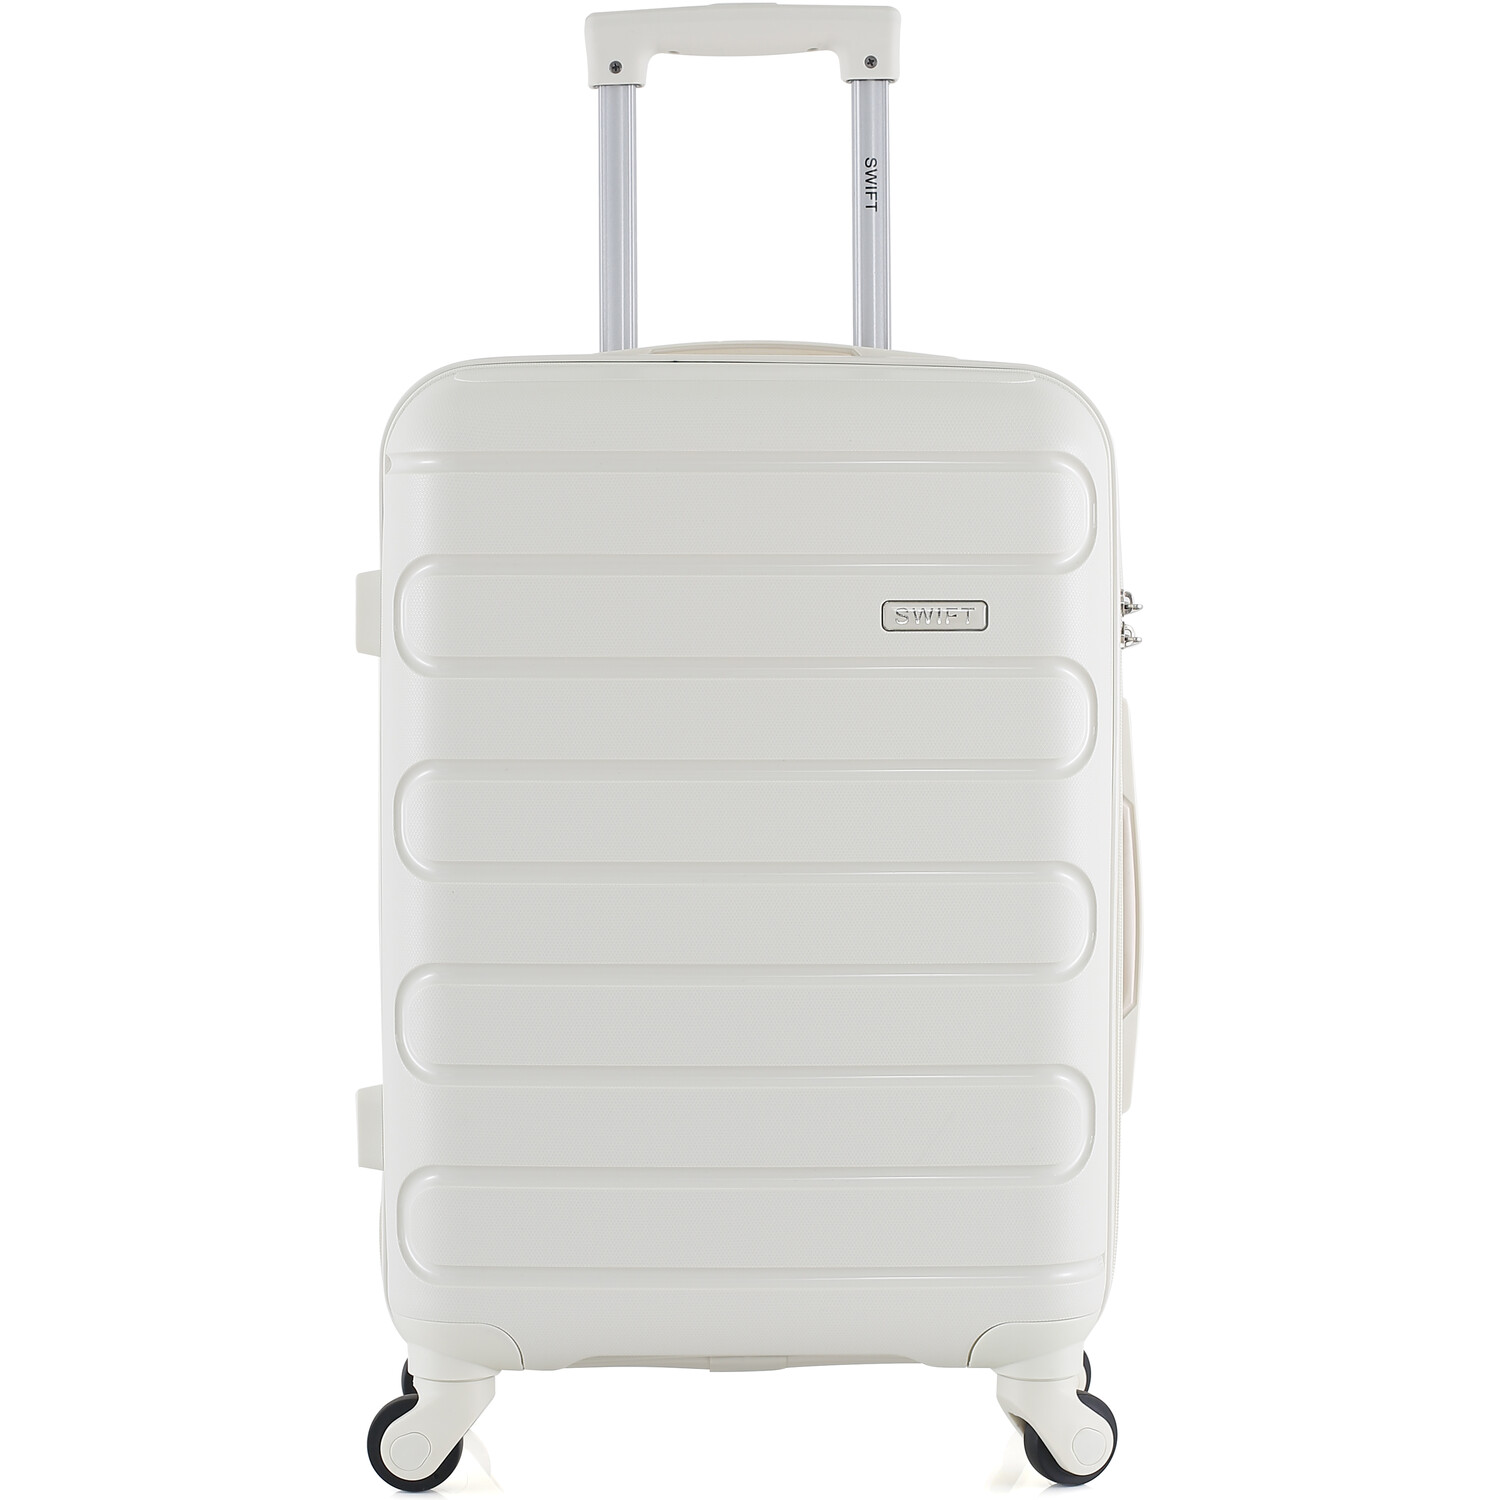 Swift Horizon Suitcase - Cotton White / Cabin Case Image 1